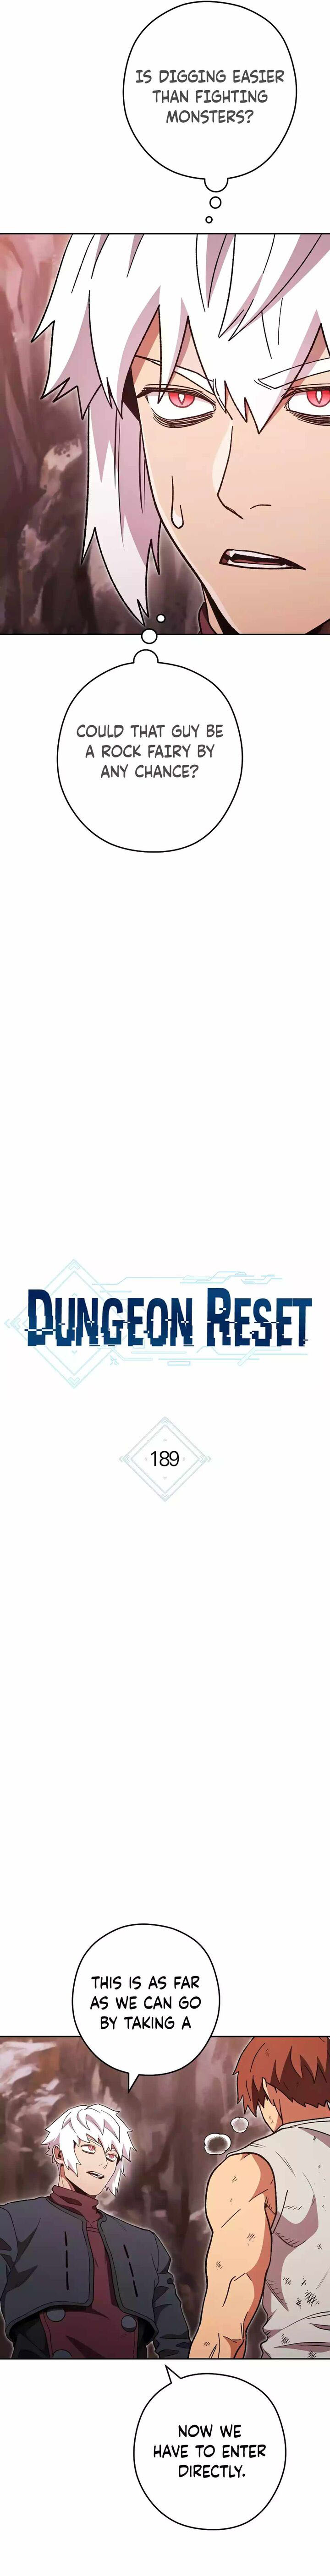 Dungeon Reset 189 3